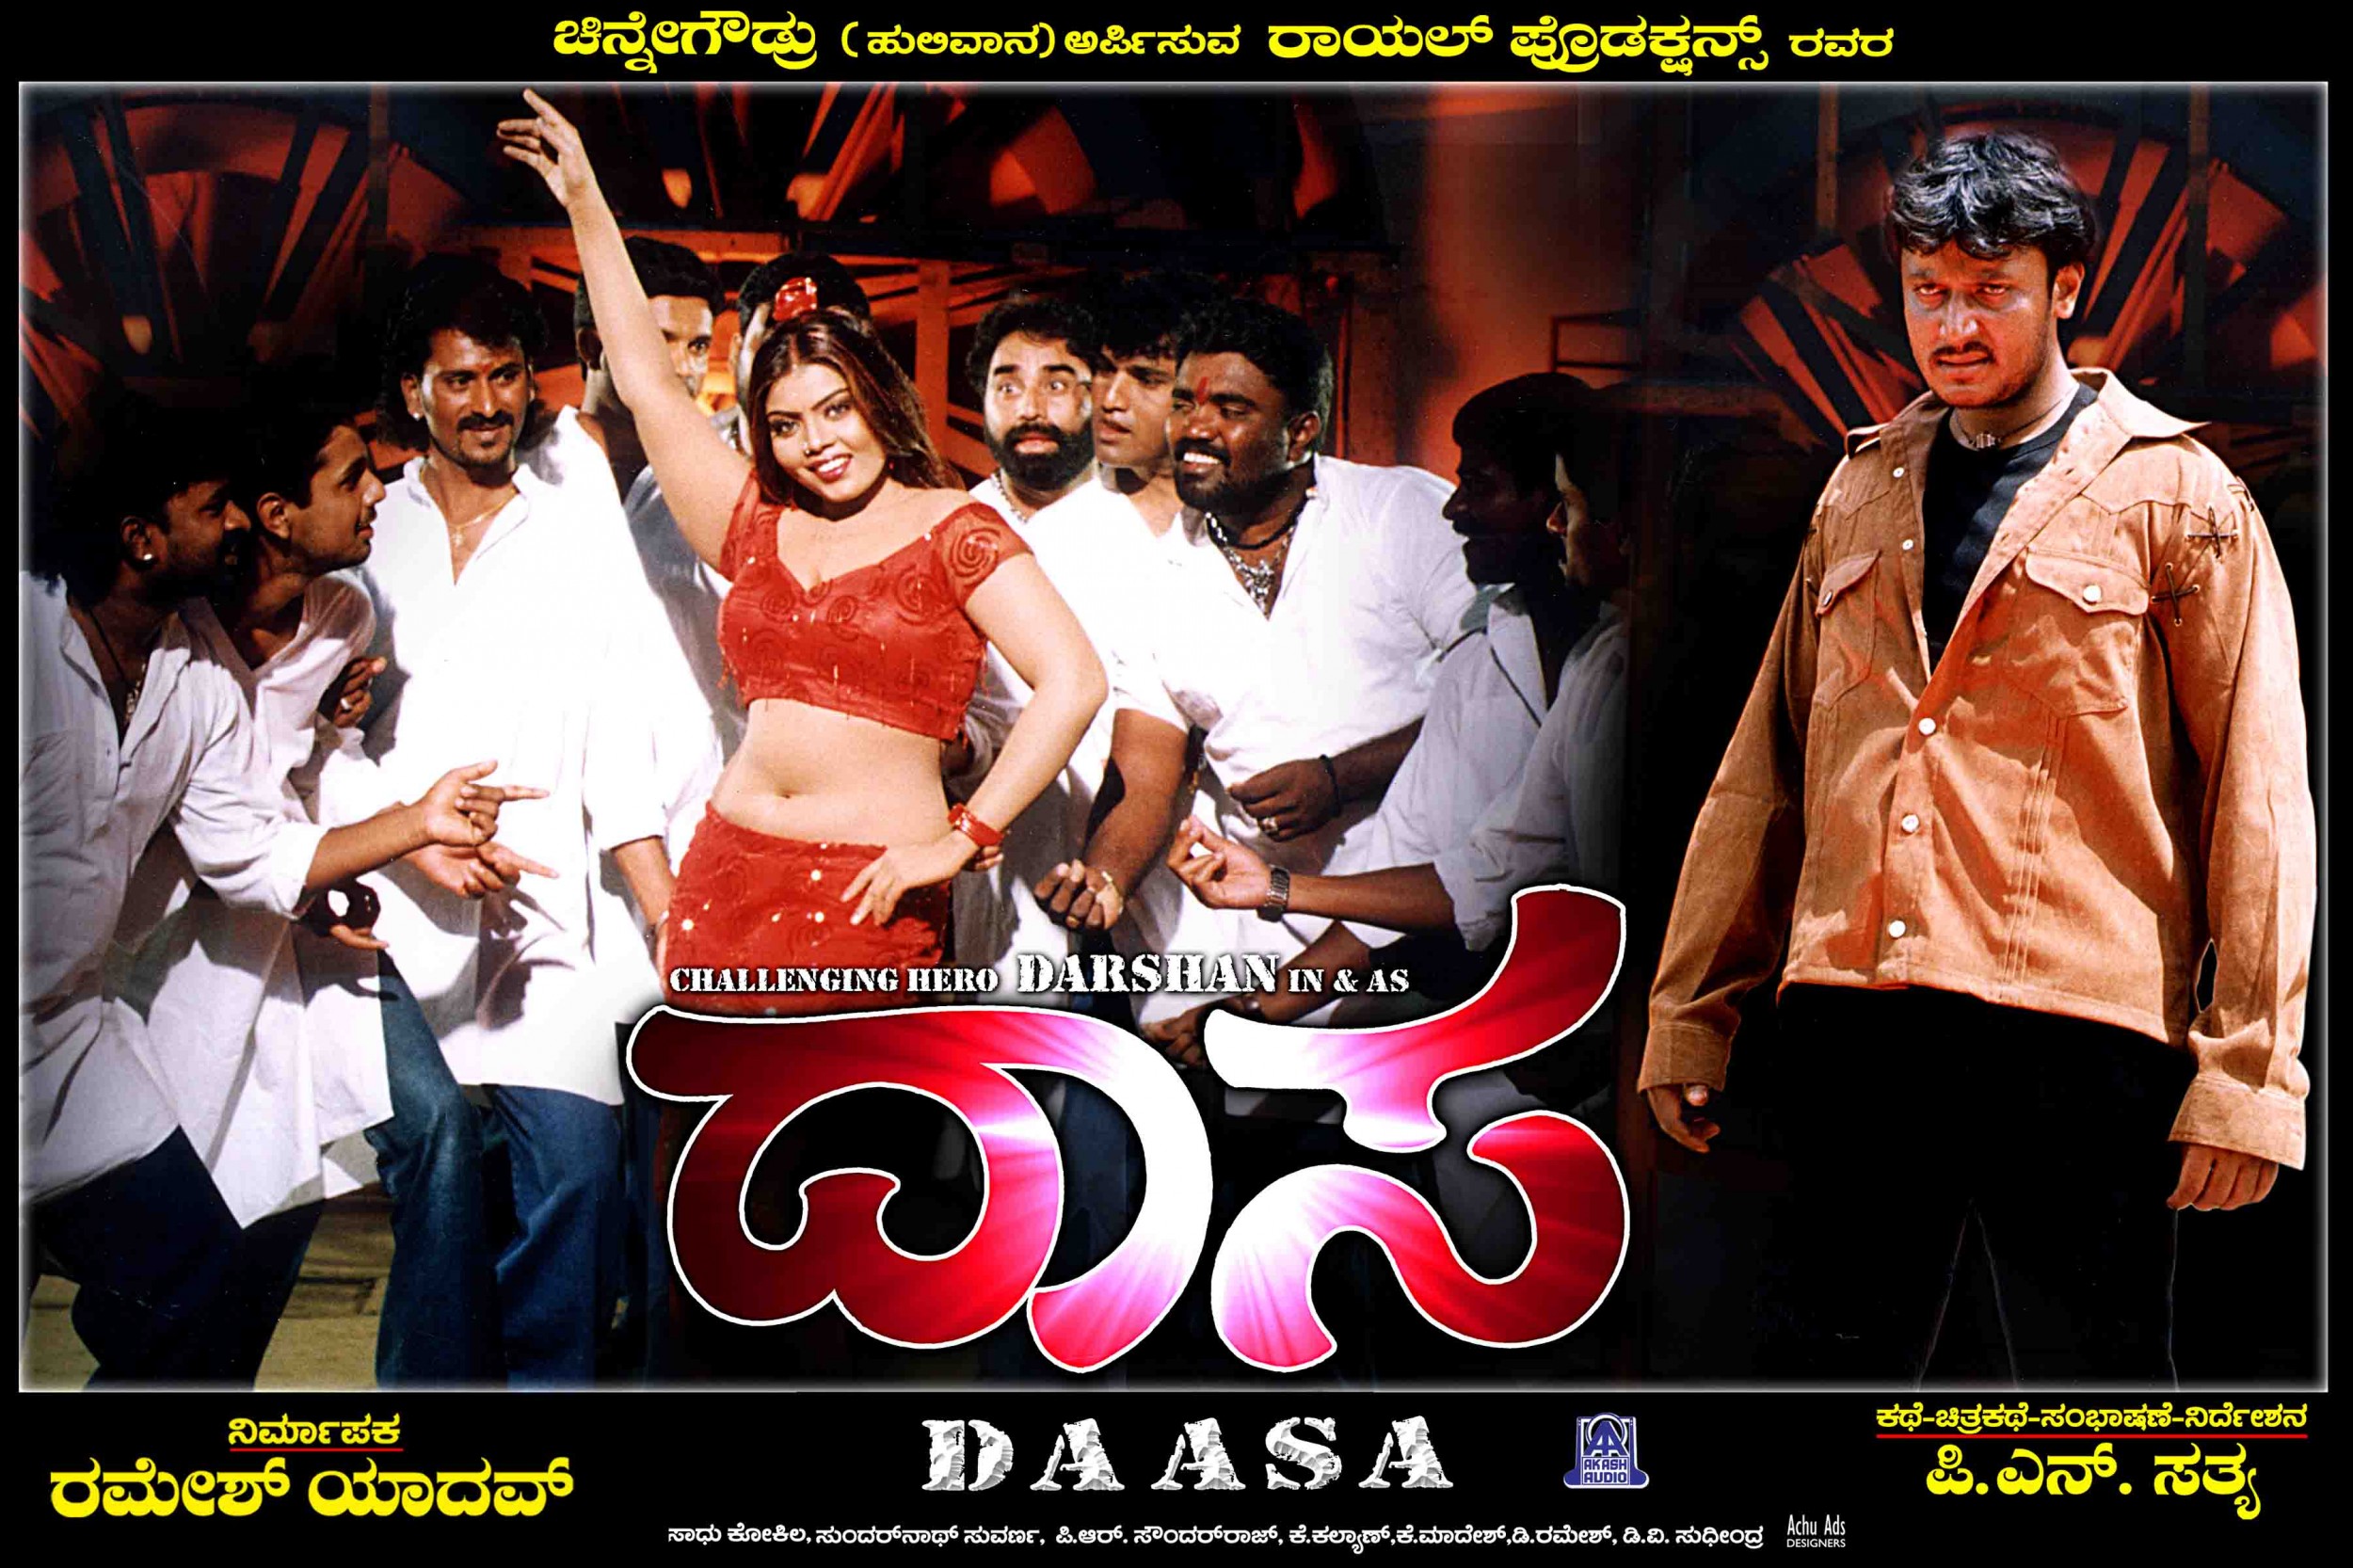 Mega Sized Movie Poster Image for Daasa (#2 of 3)